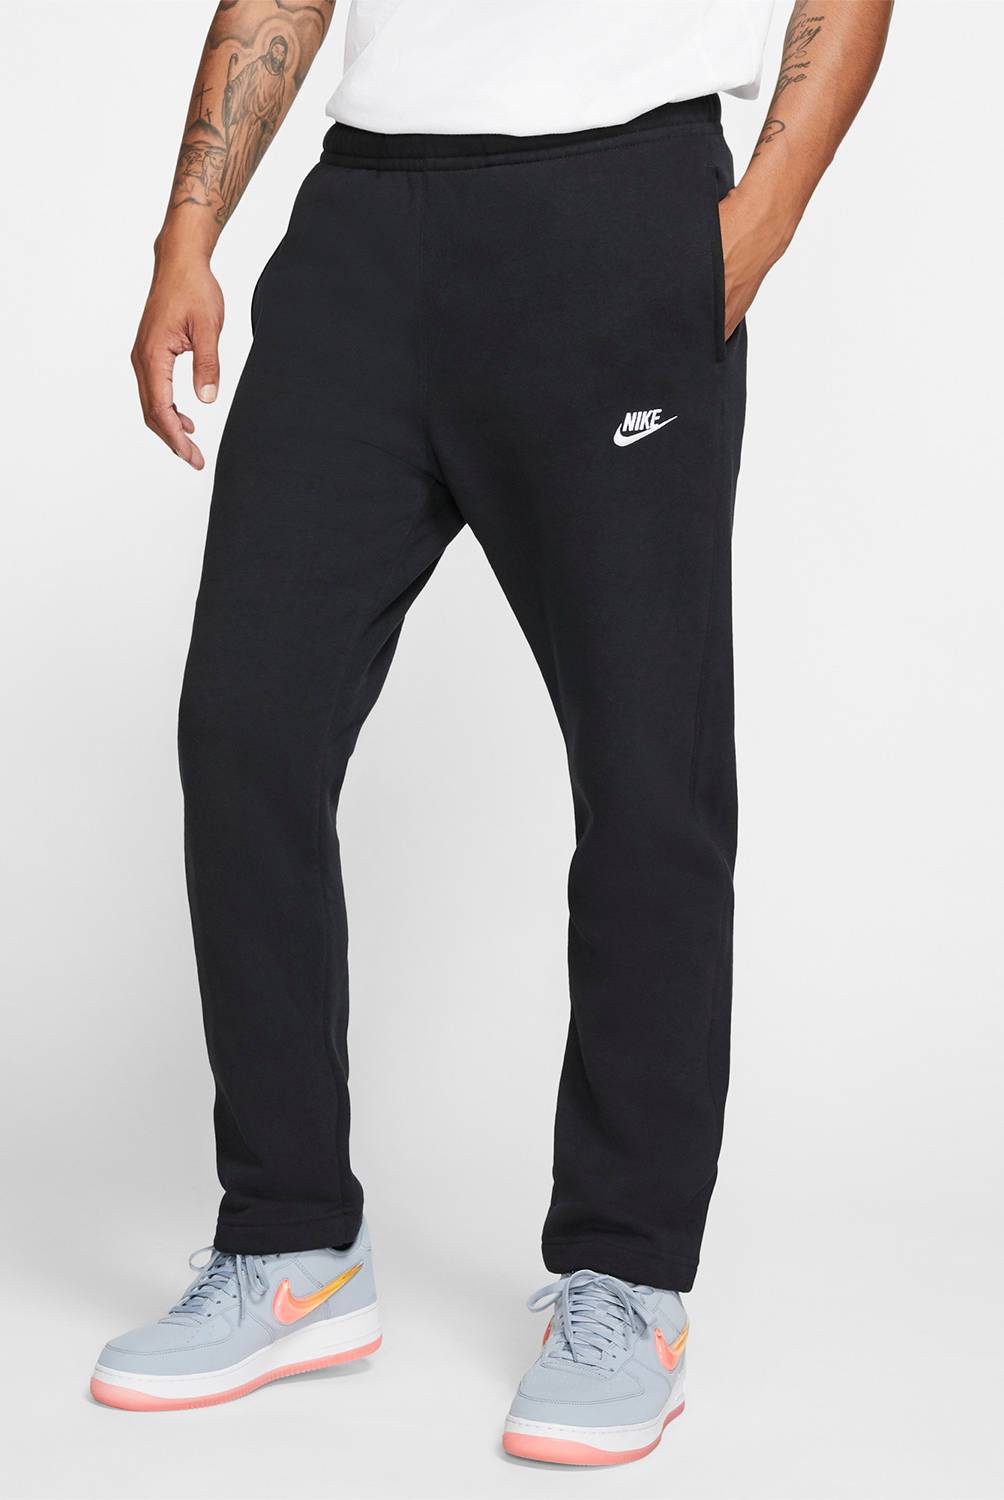 NIKE - Pantalón De Buzo Regular Fit Hombre Nike